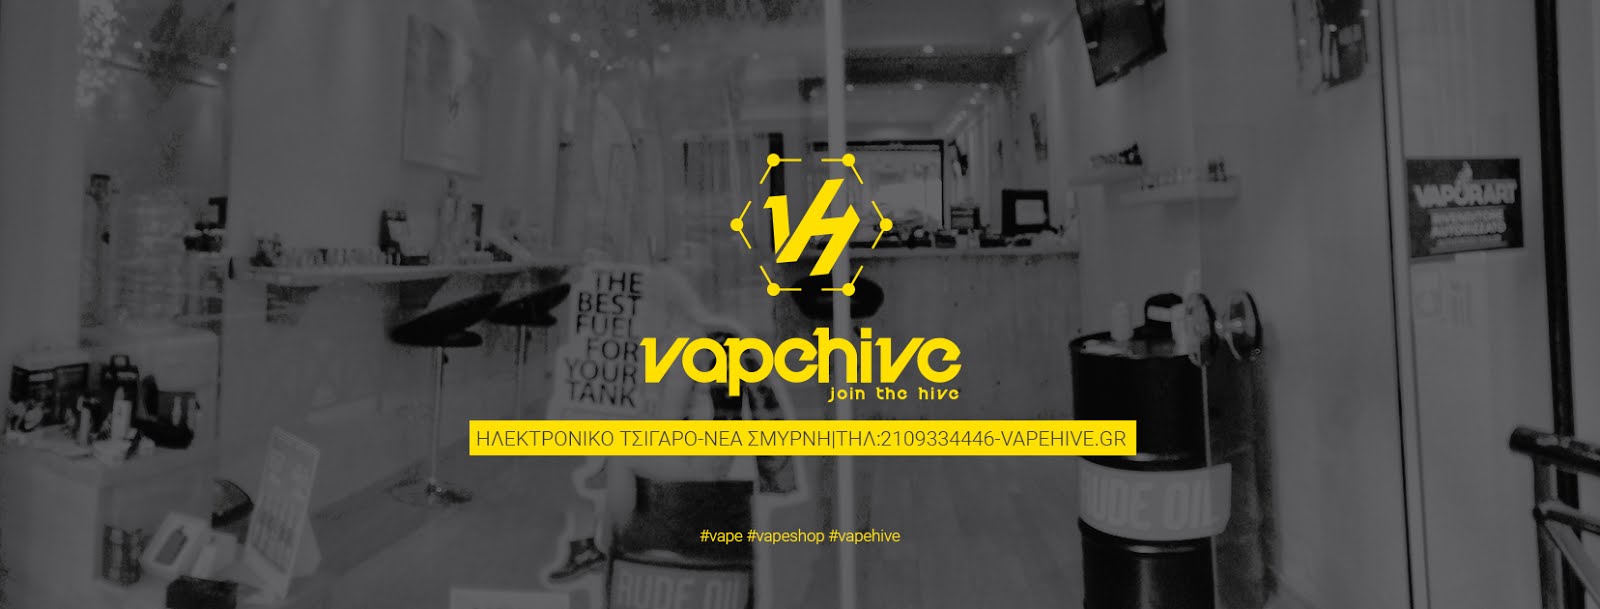 VapeHive.gr